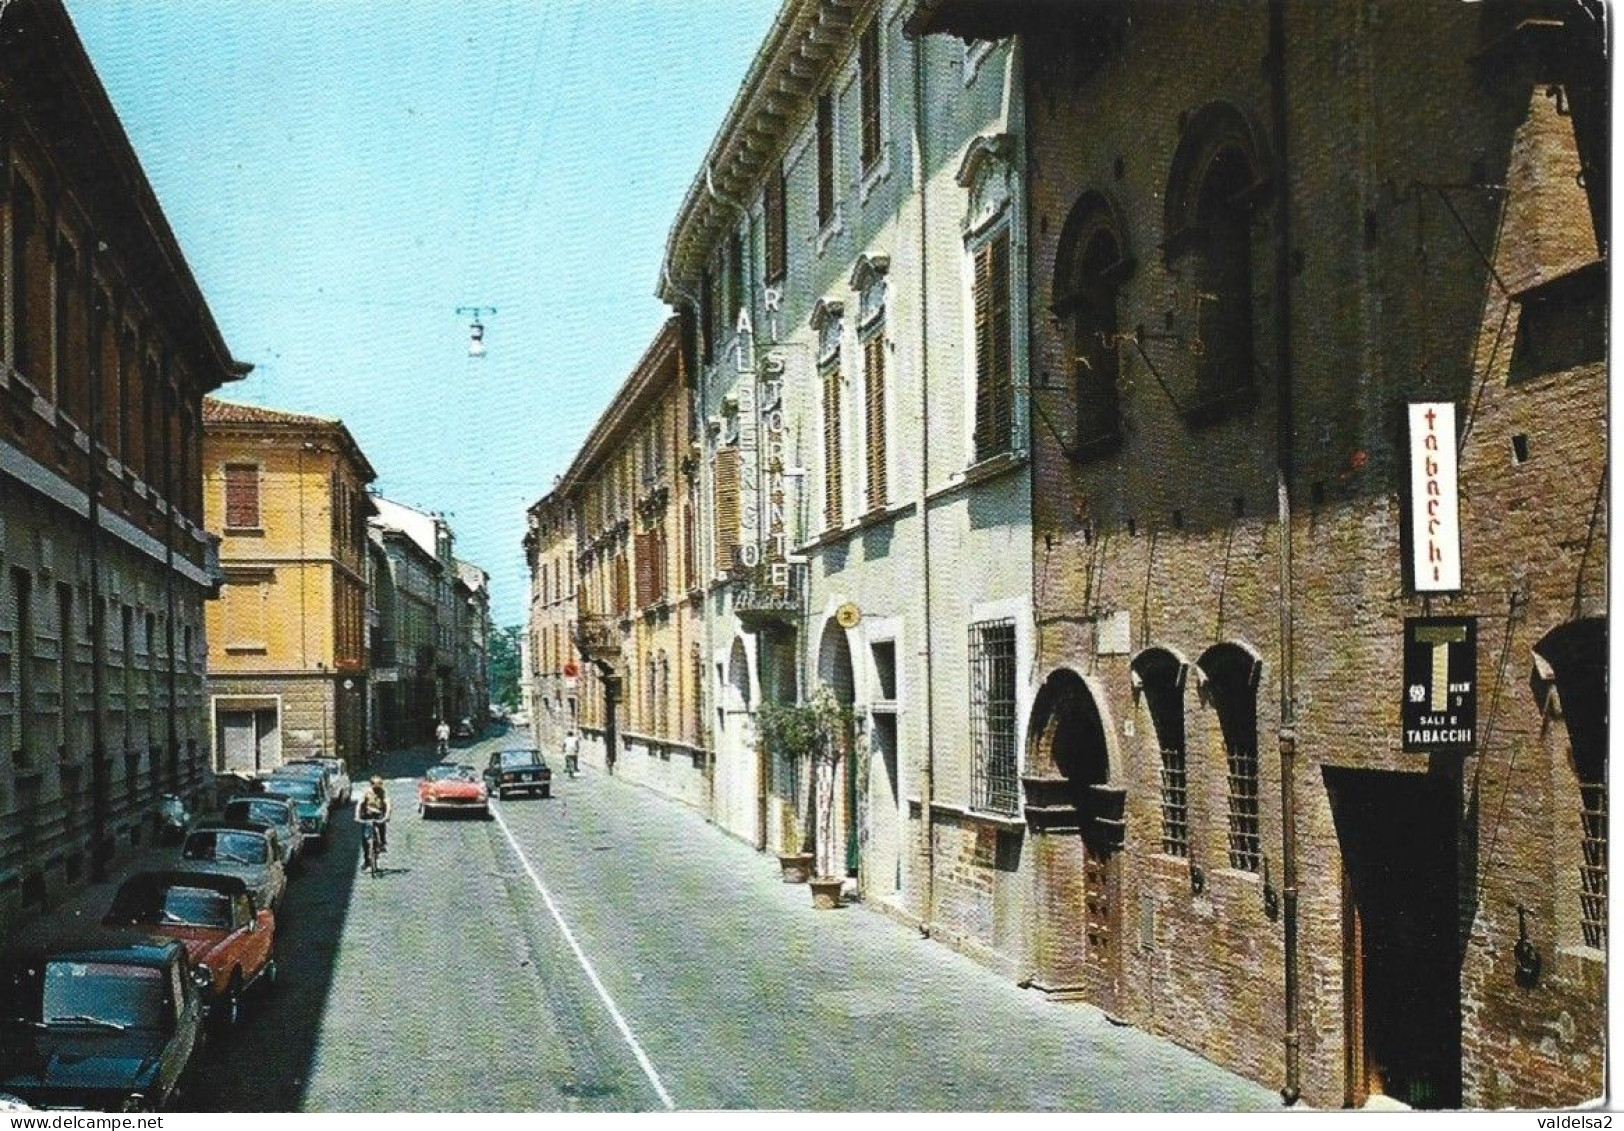 LUGO - RAVENNA - CORSO MATTEOTTI - TABACCHERIA / SALE E TABACCHI -1972 - Ravenna